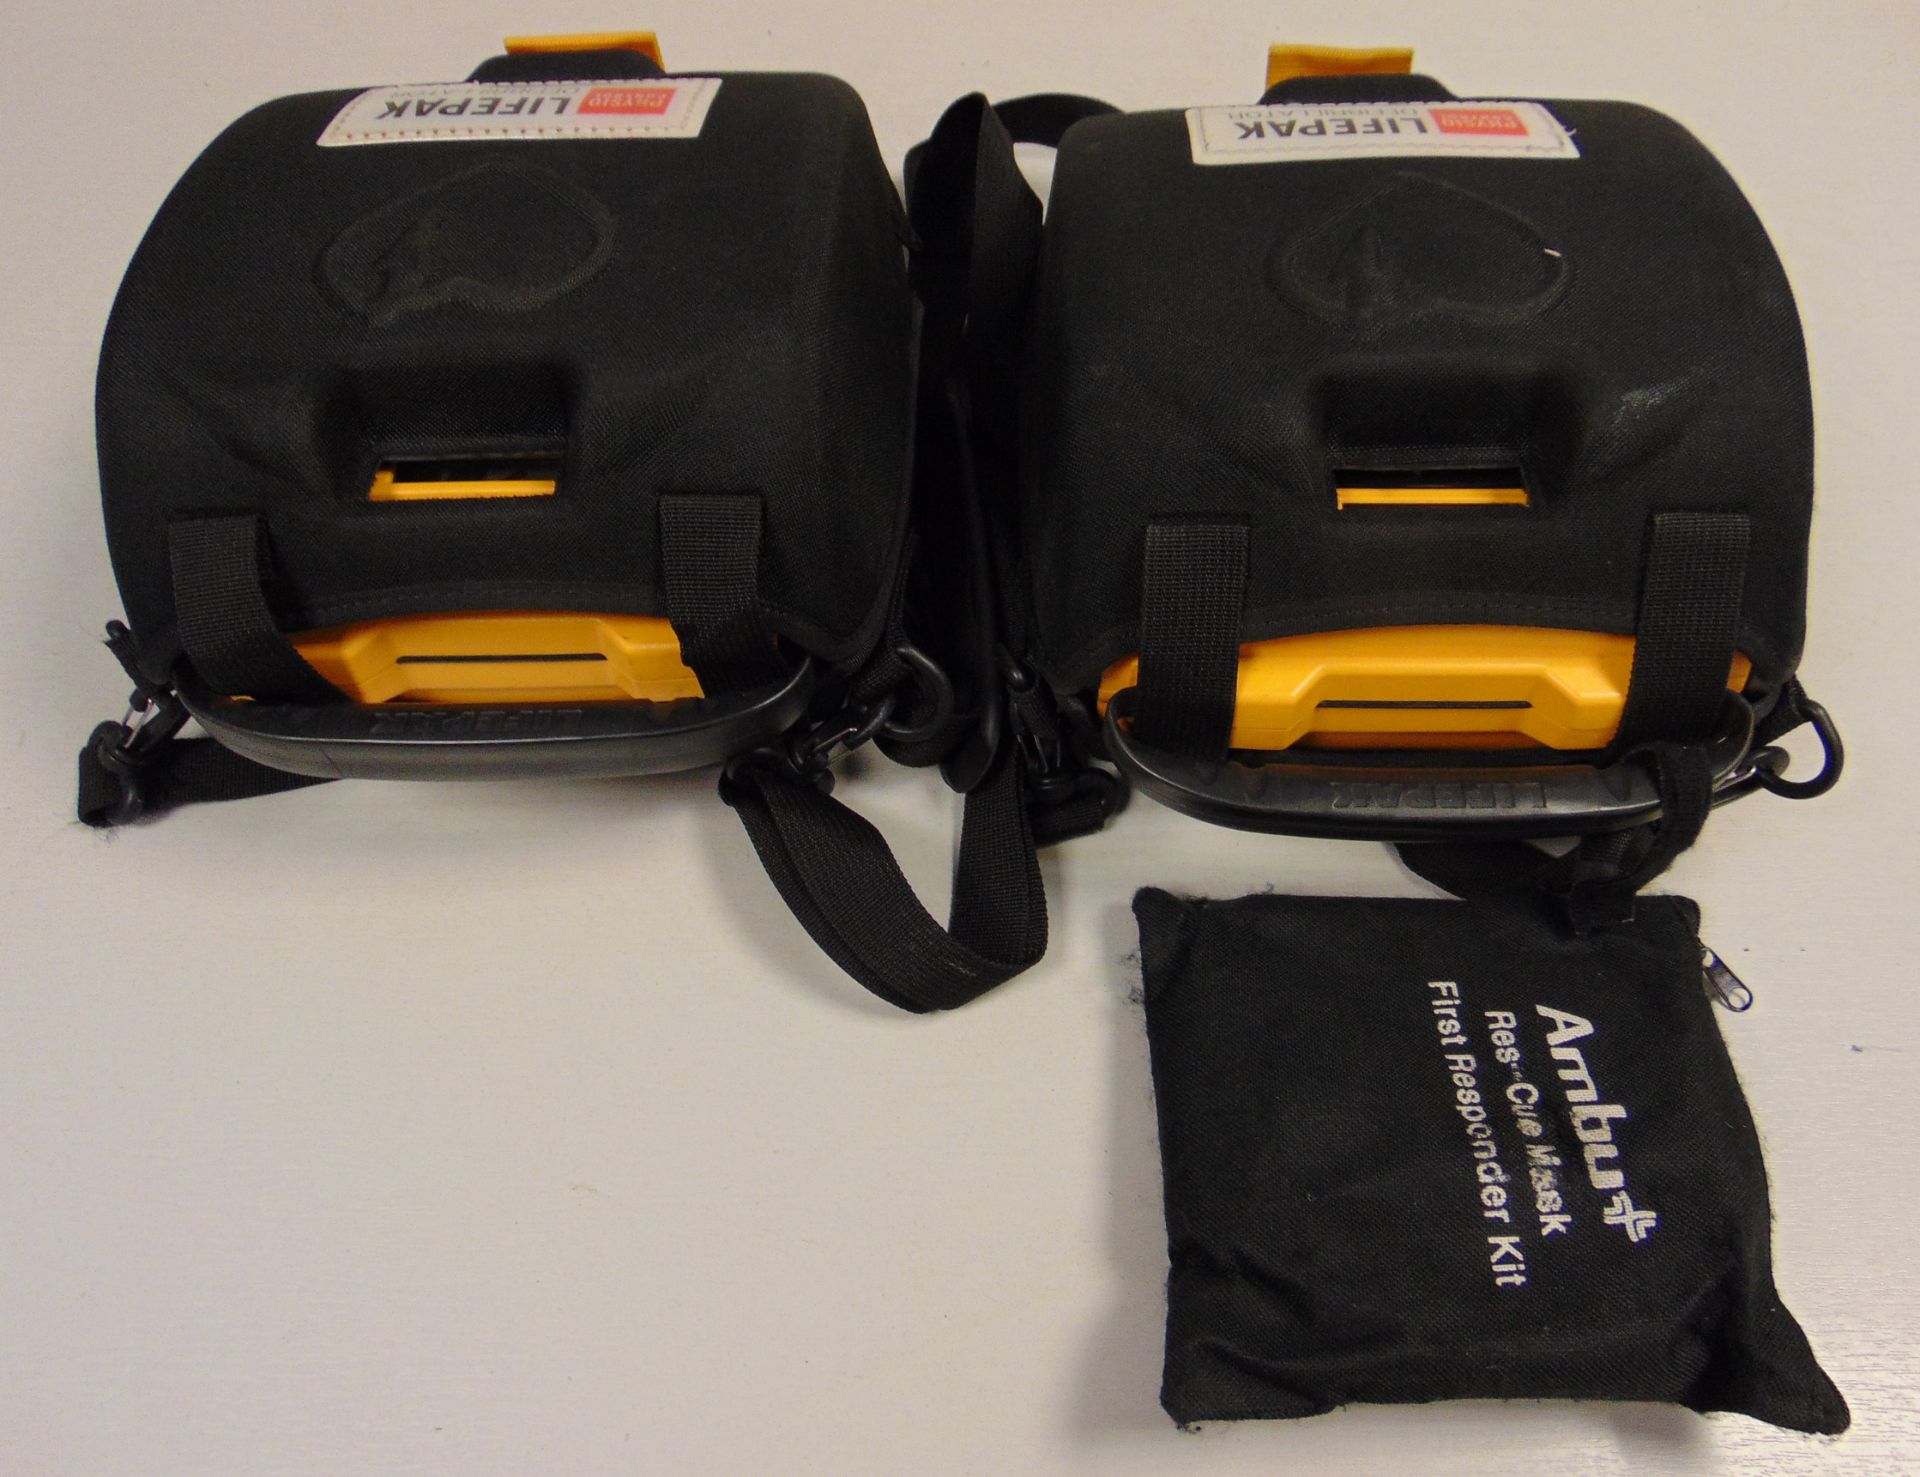 2 x Physio-Control Lifepak CR Plus Defibrillator Units - Fully Automatic - Image 4 of 4